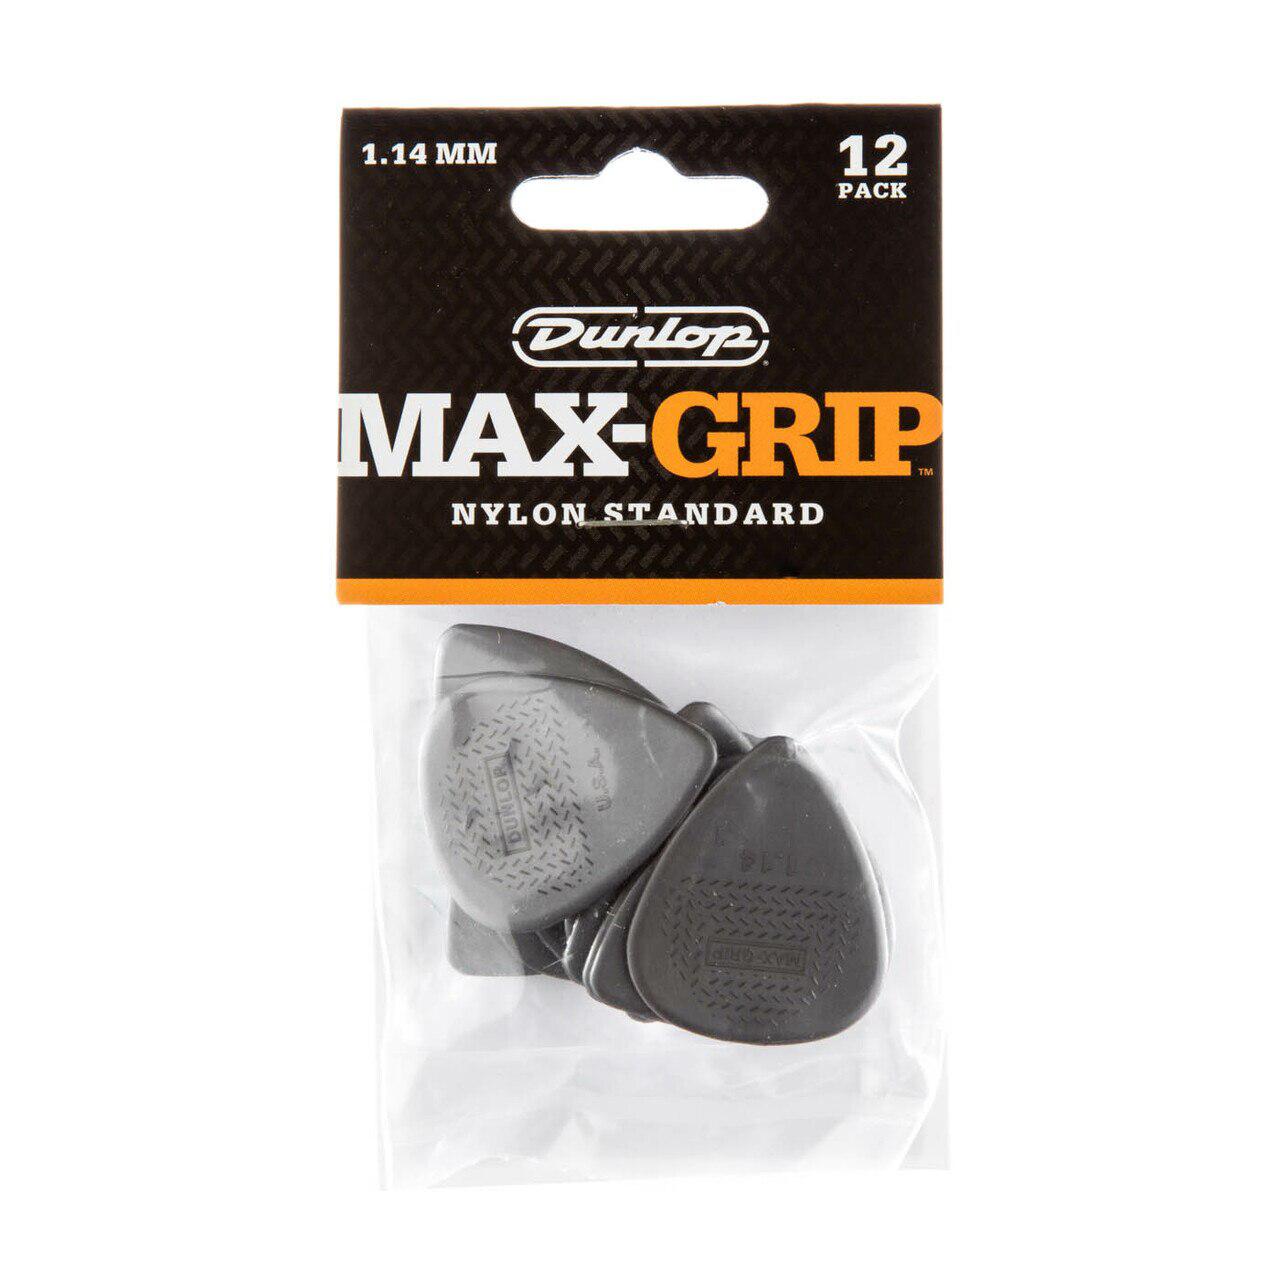 Dunlop - Plumillas Max Grip Nylon Standard, 36 Piezas Calibre: 1.14 Mod.449B1.14 (36)_15